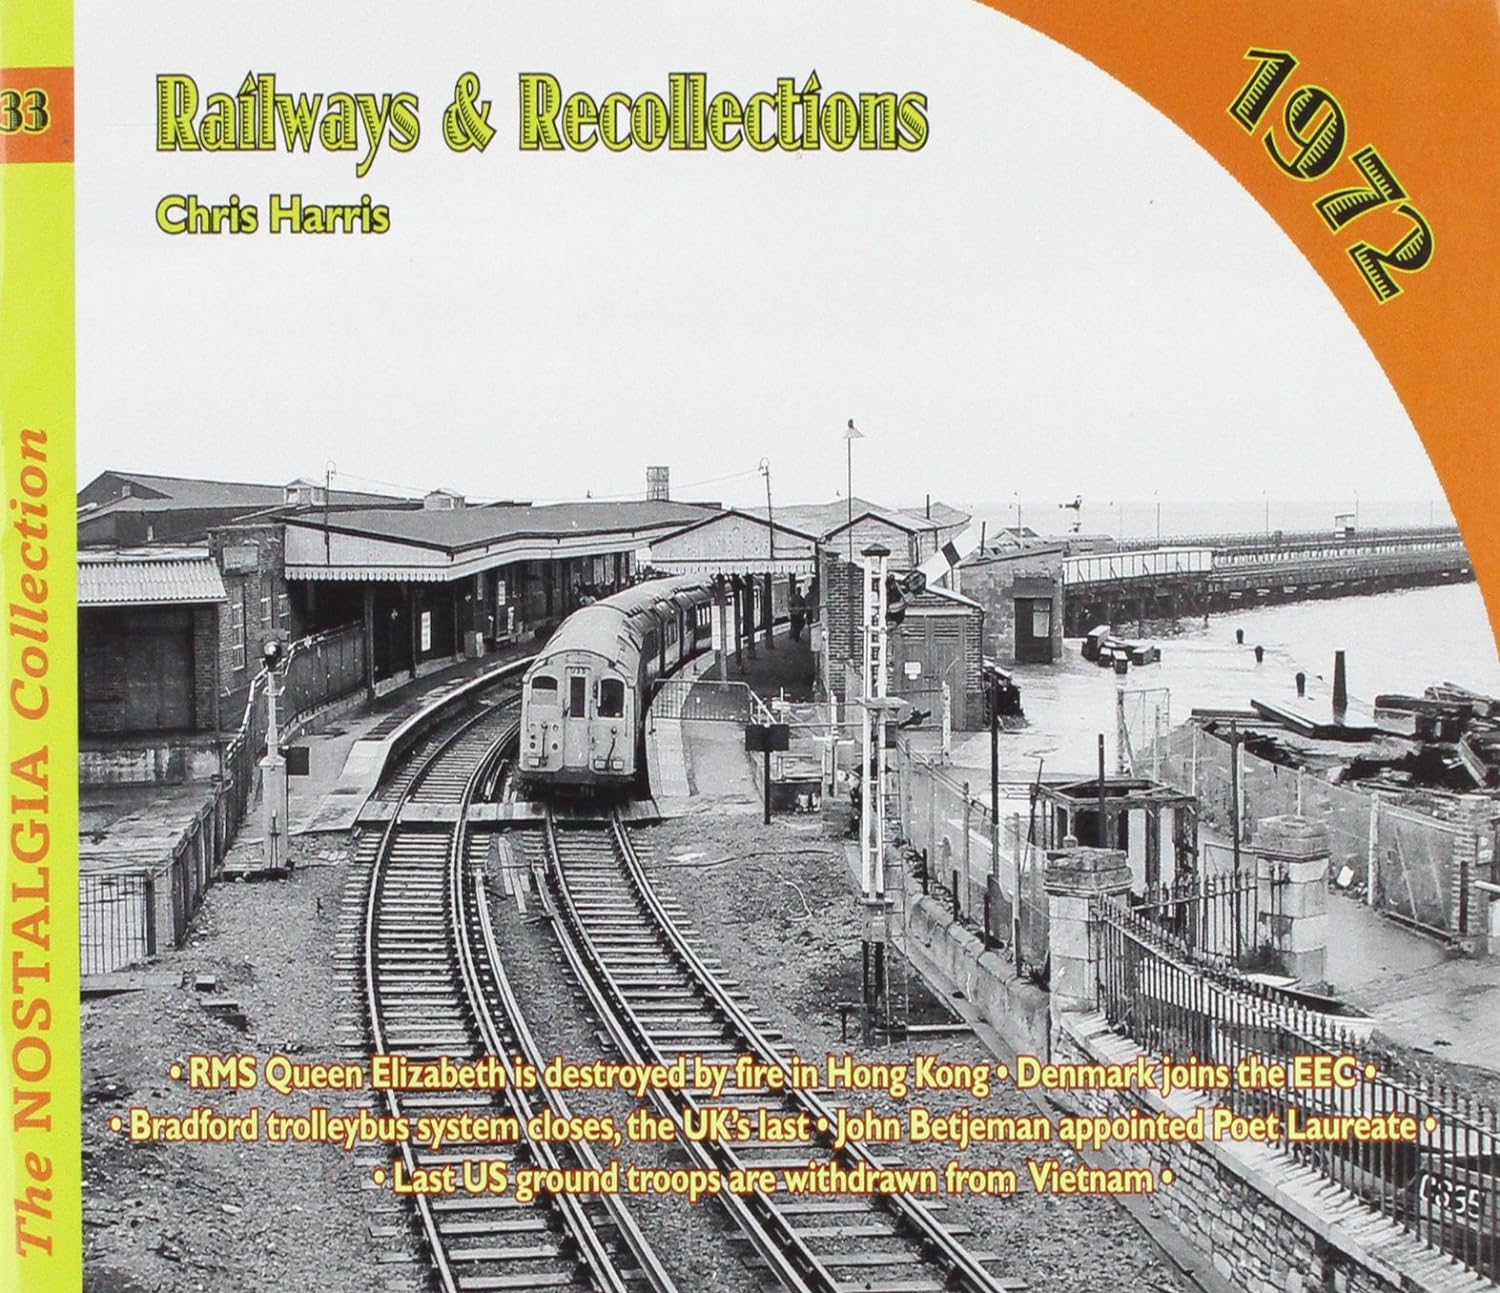 Vol 33: Railways & Recollections 1972